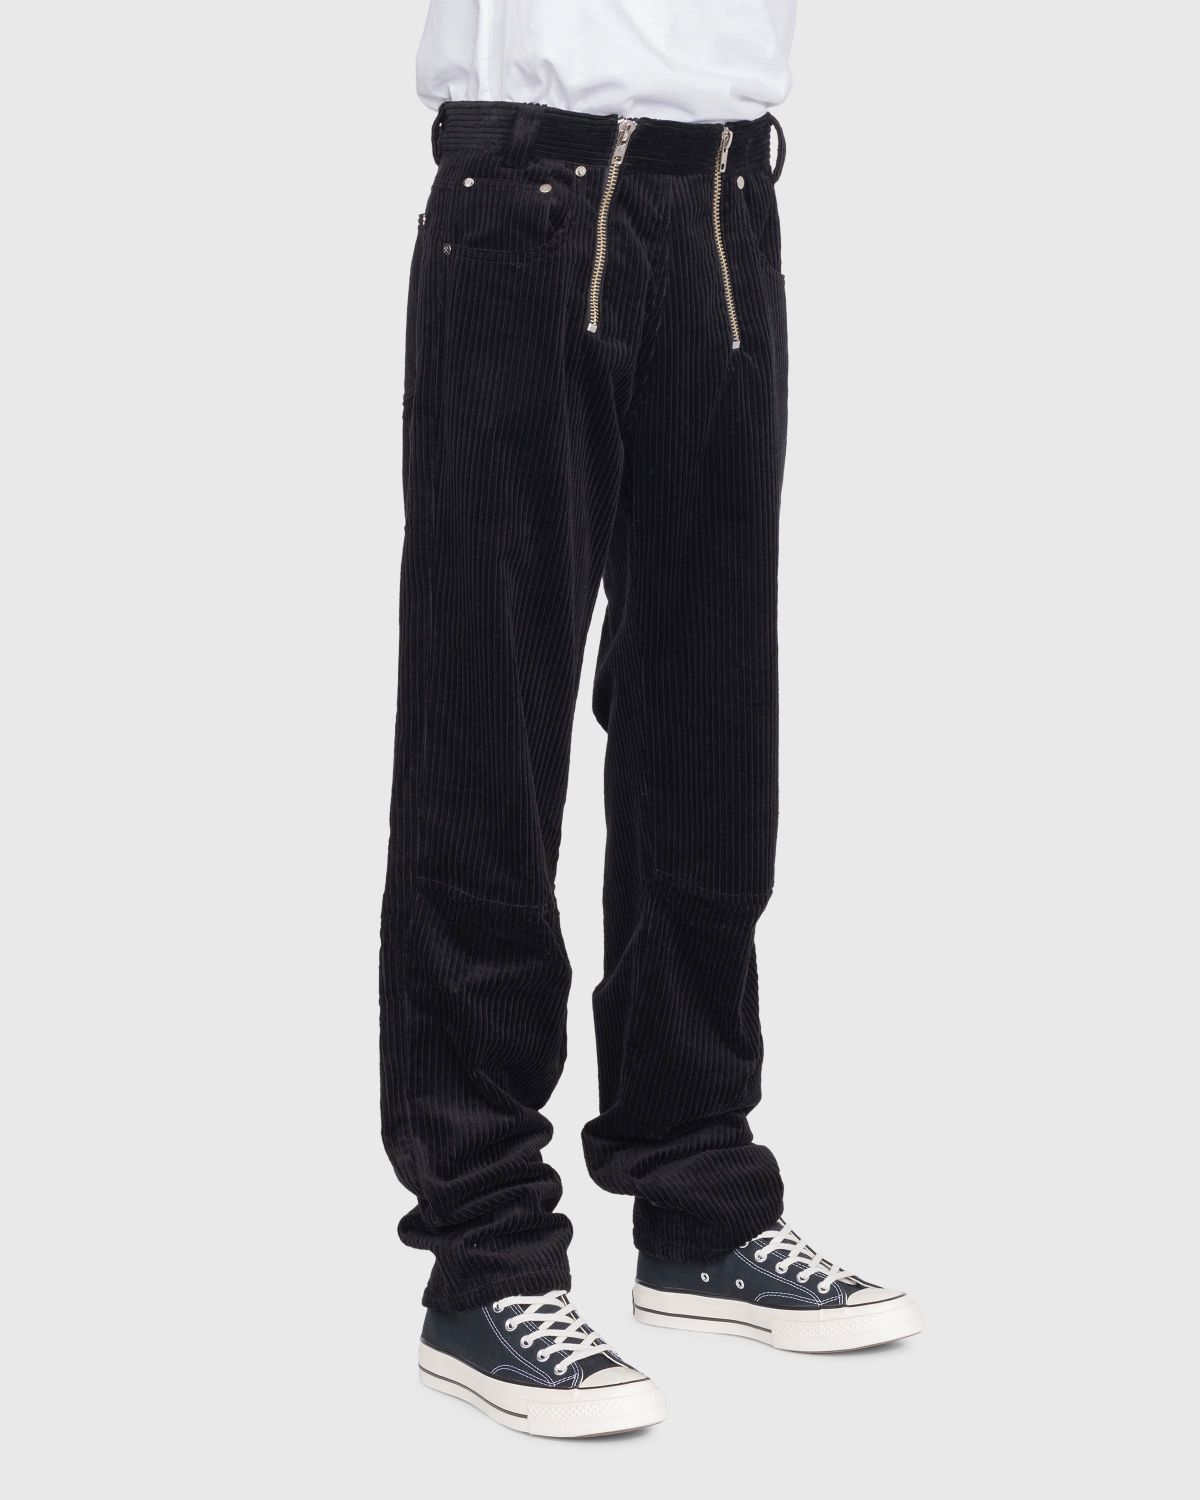 GmbH – Bekir Cargo Trousers With Double Zips Black Corduroy - Pants - Black - Image 3